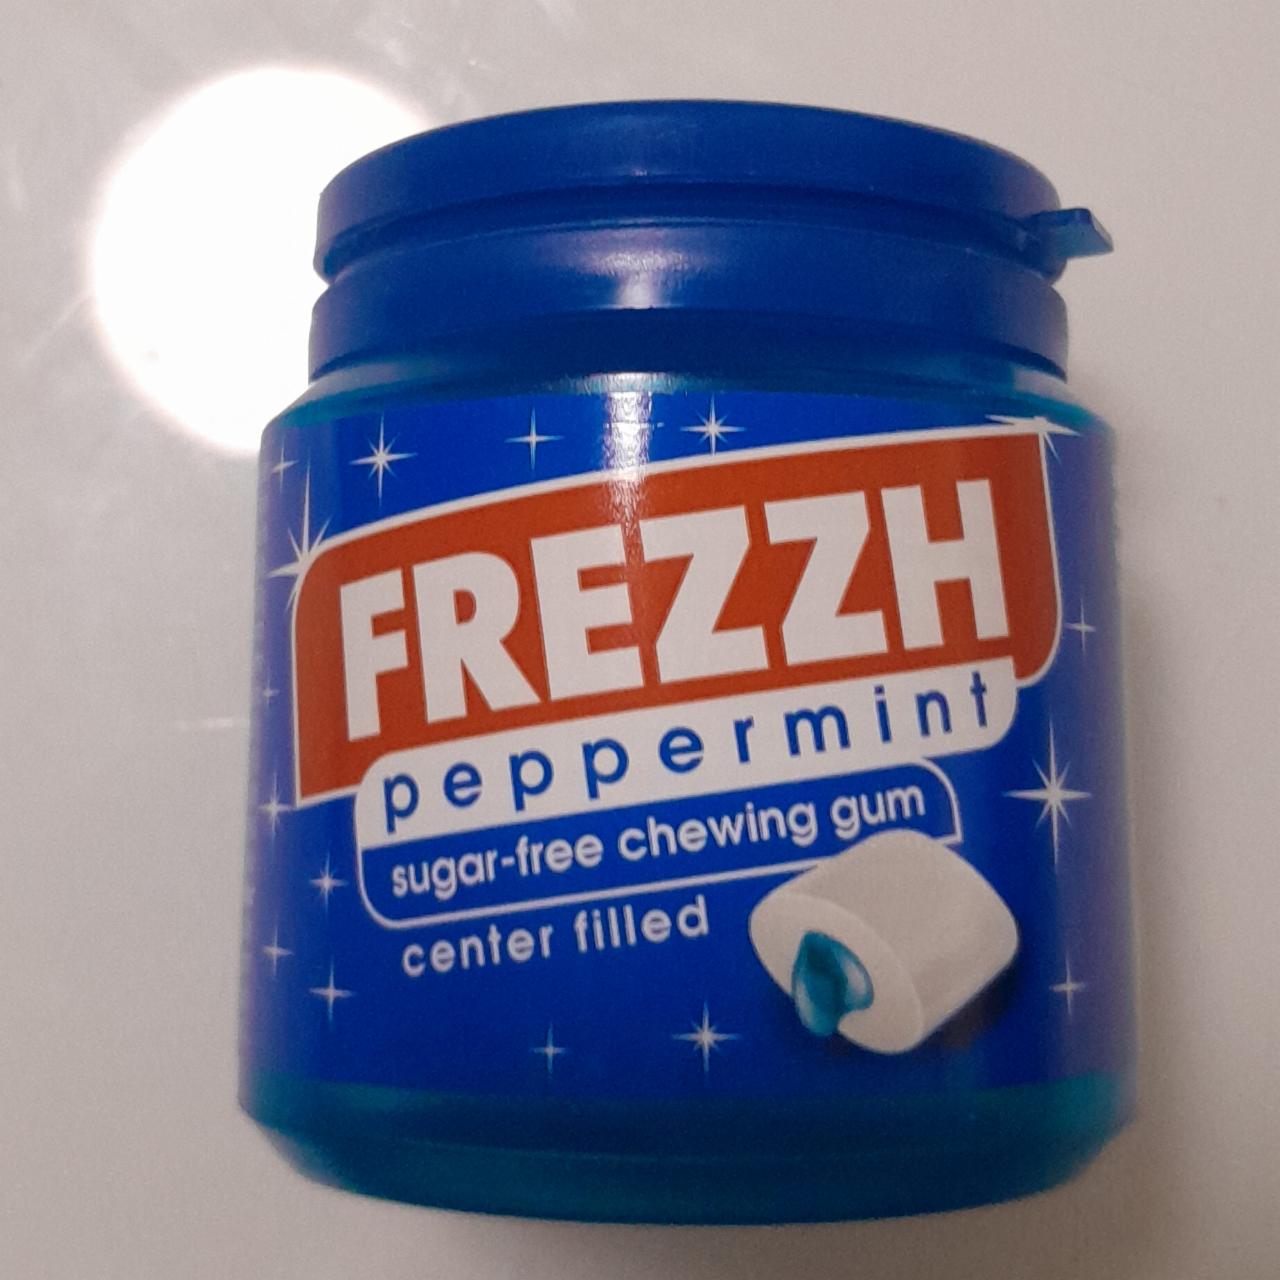 Fotografie - Peppermint sugar-free chewing gum center filled Frezzh